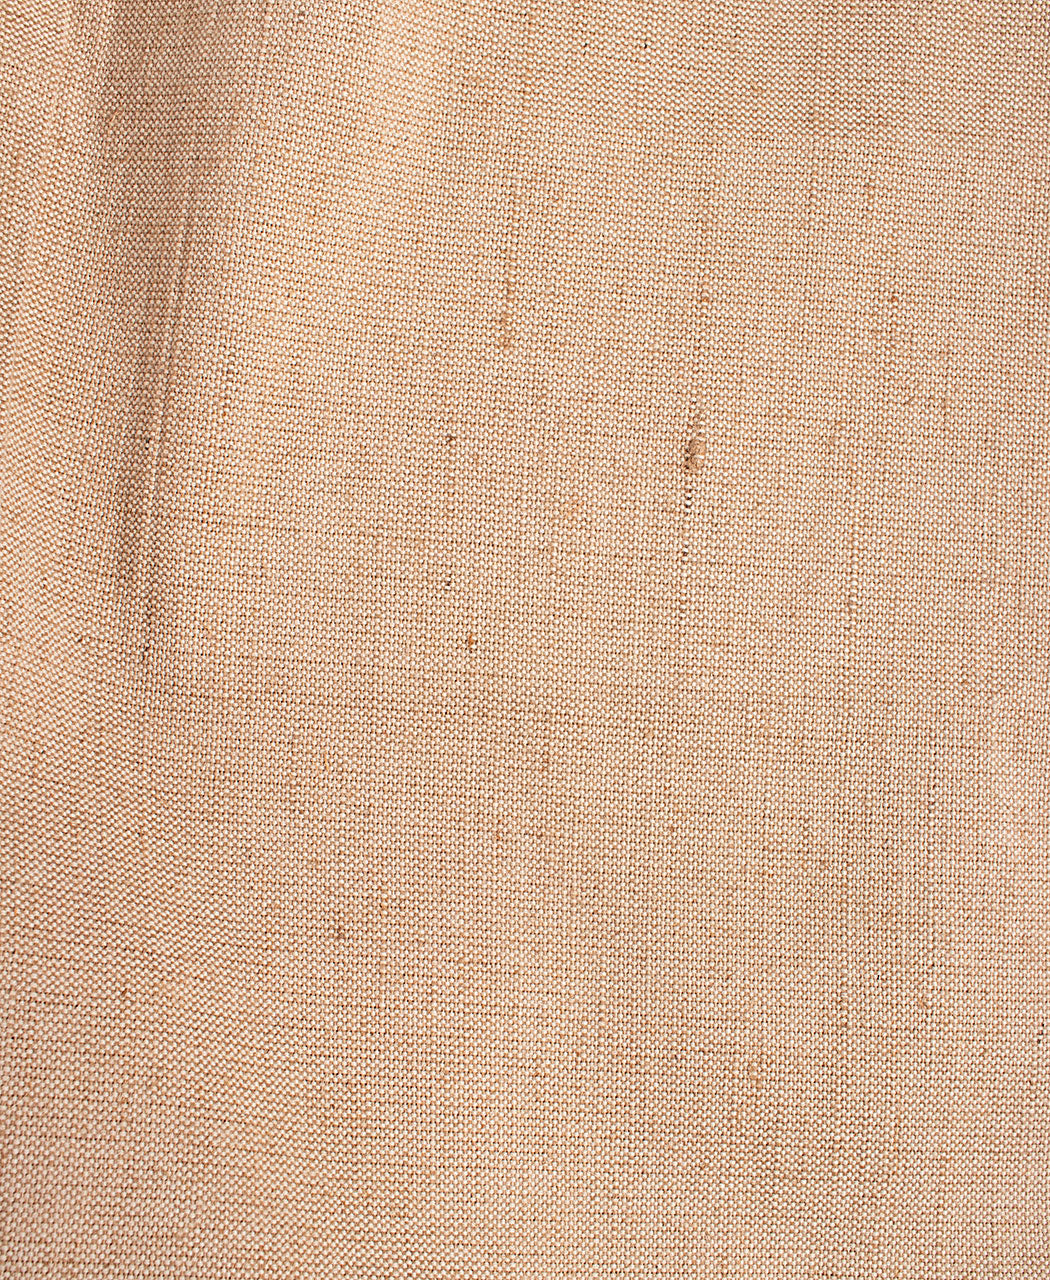 Beige Plain Cotton Jute Fabric For Home Furnishing ( Width 52 Inch )